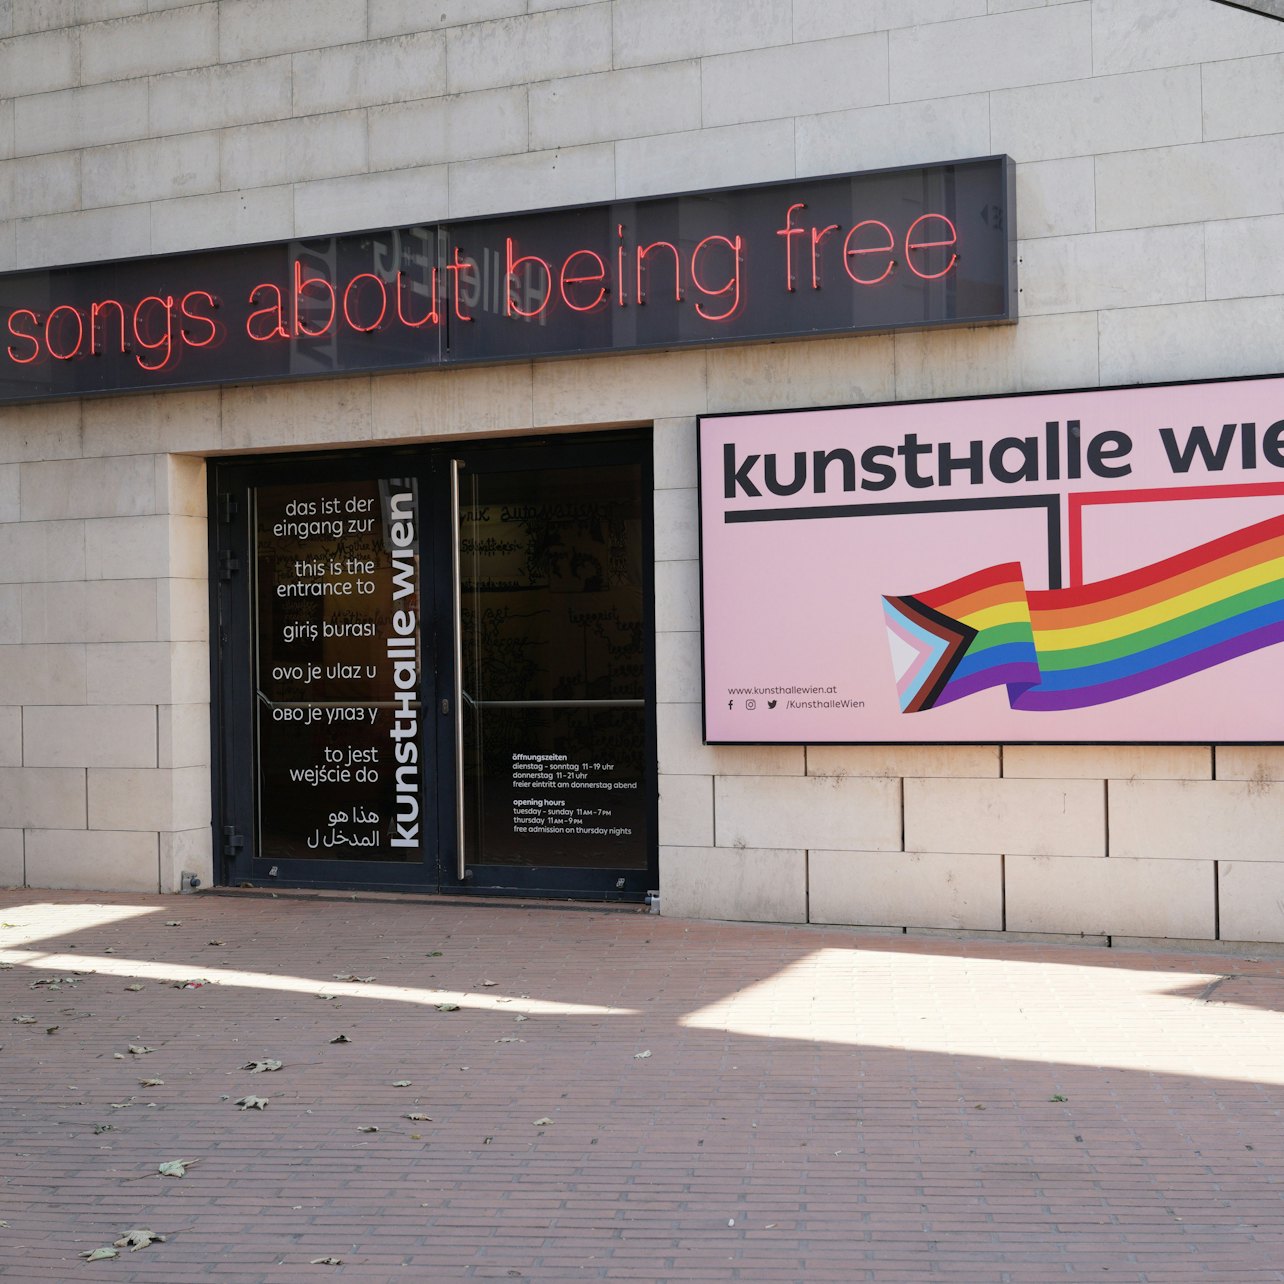 Kunsthalle Wien - Accommodations in Vienna